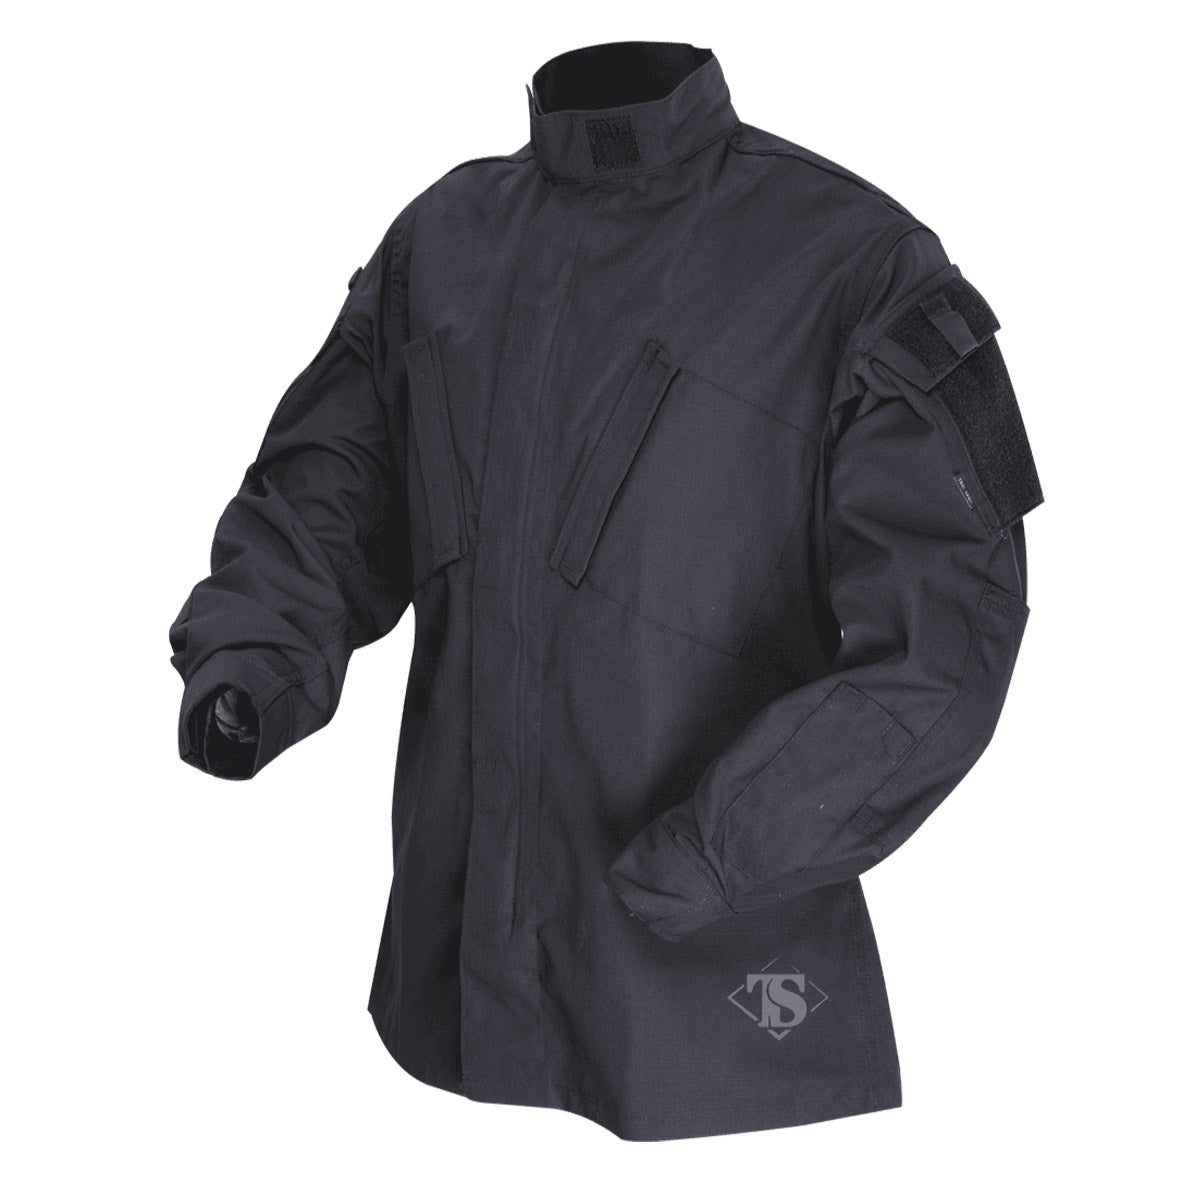 Tru-Spec Tactical Response Uniform Shirt (Nylon/Cotton)